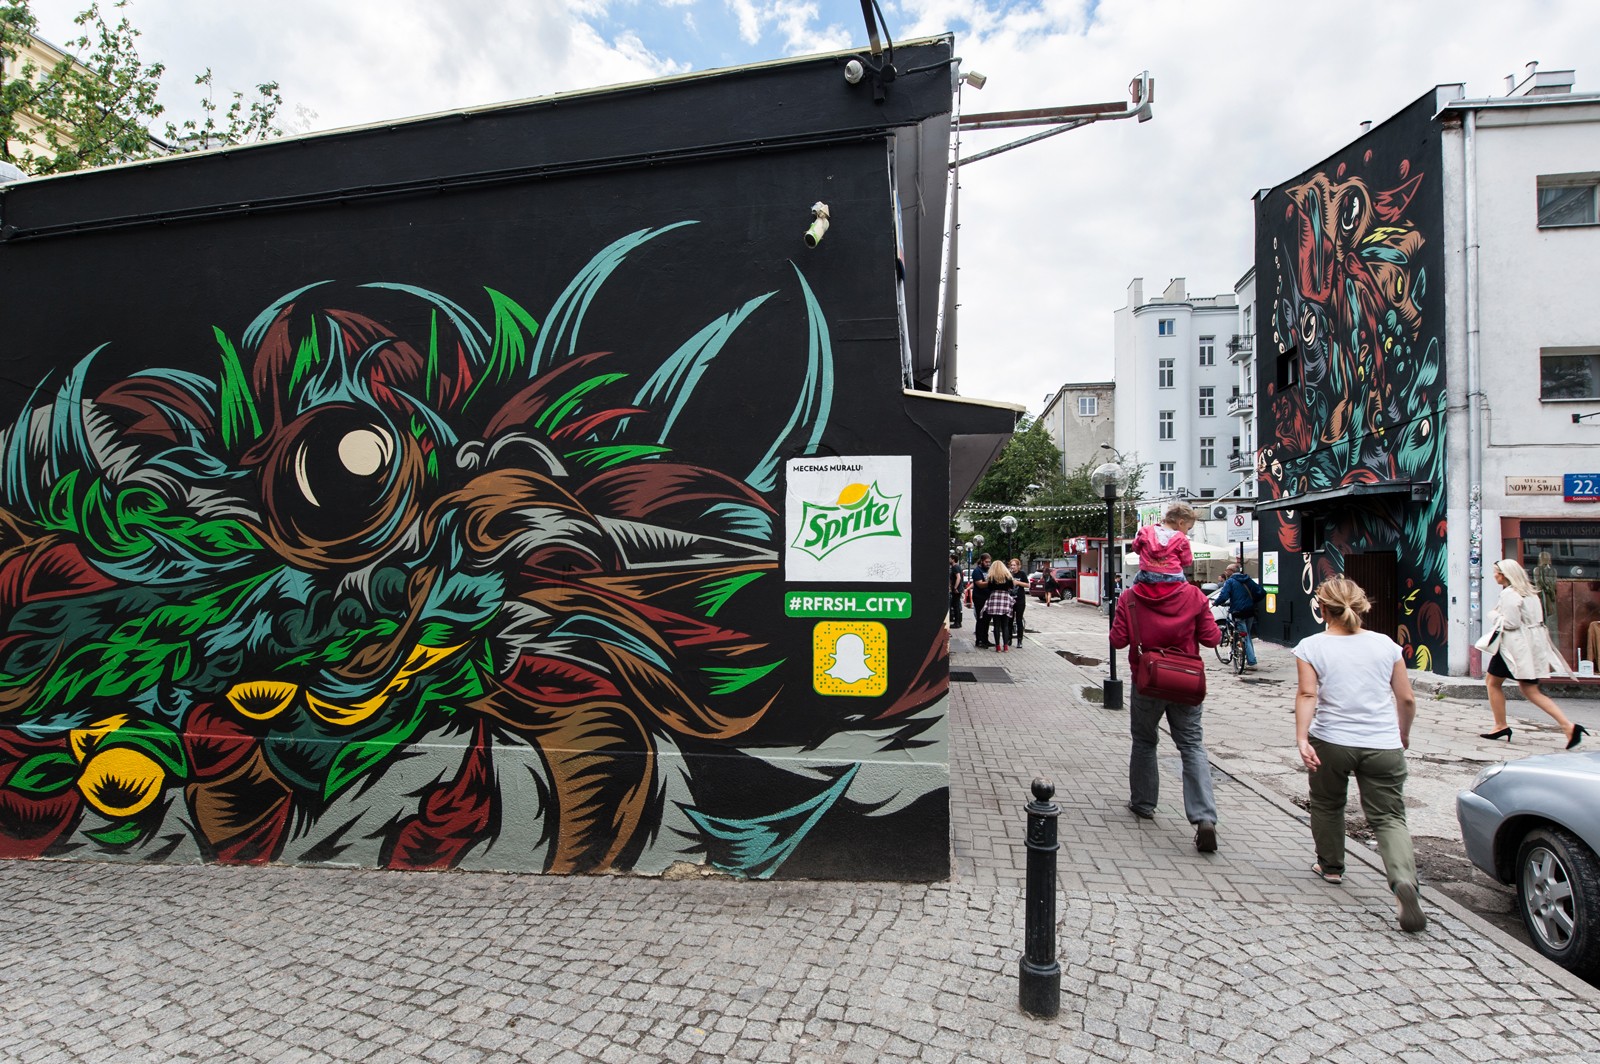 Advertising mural for Sprite by Swanski at 22 Nowy Swiat street | #RFRSH_CITY | Portfolio